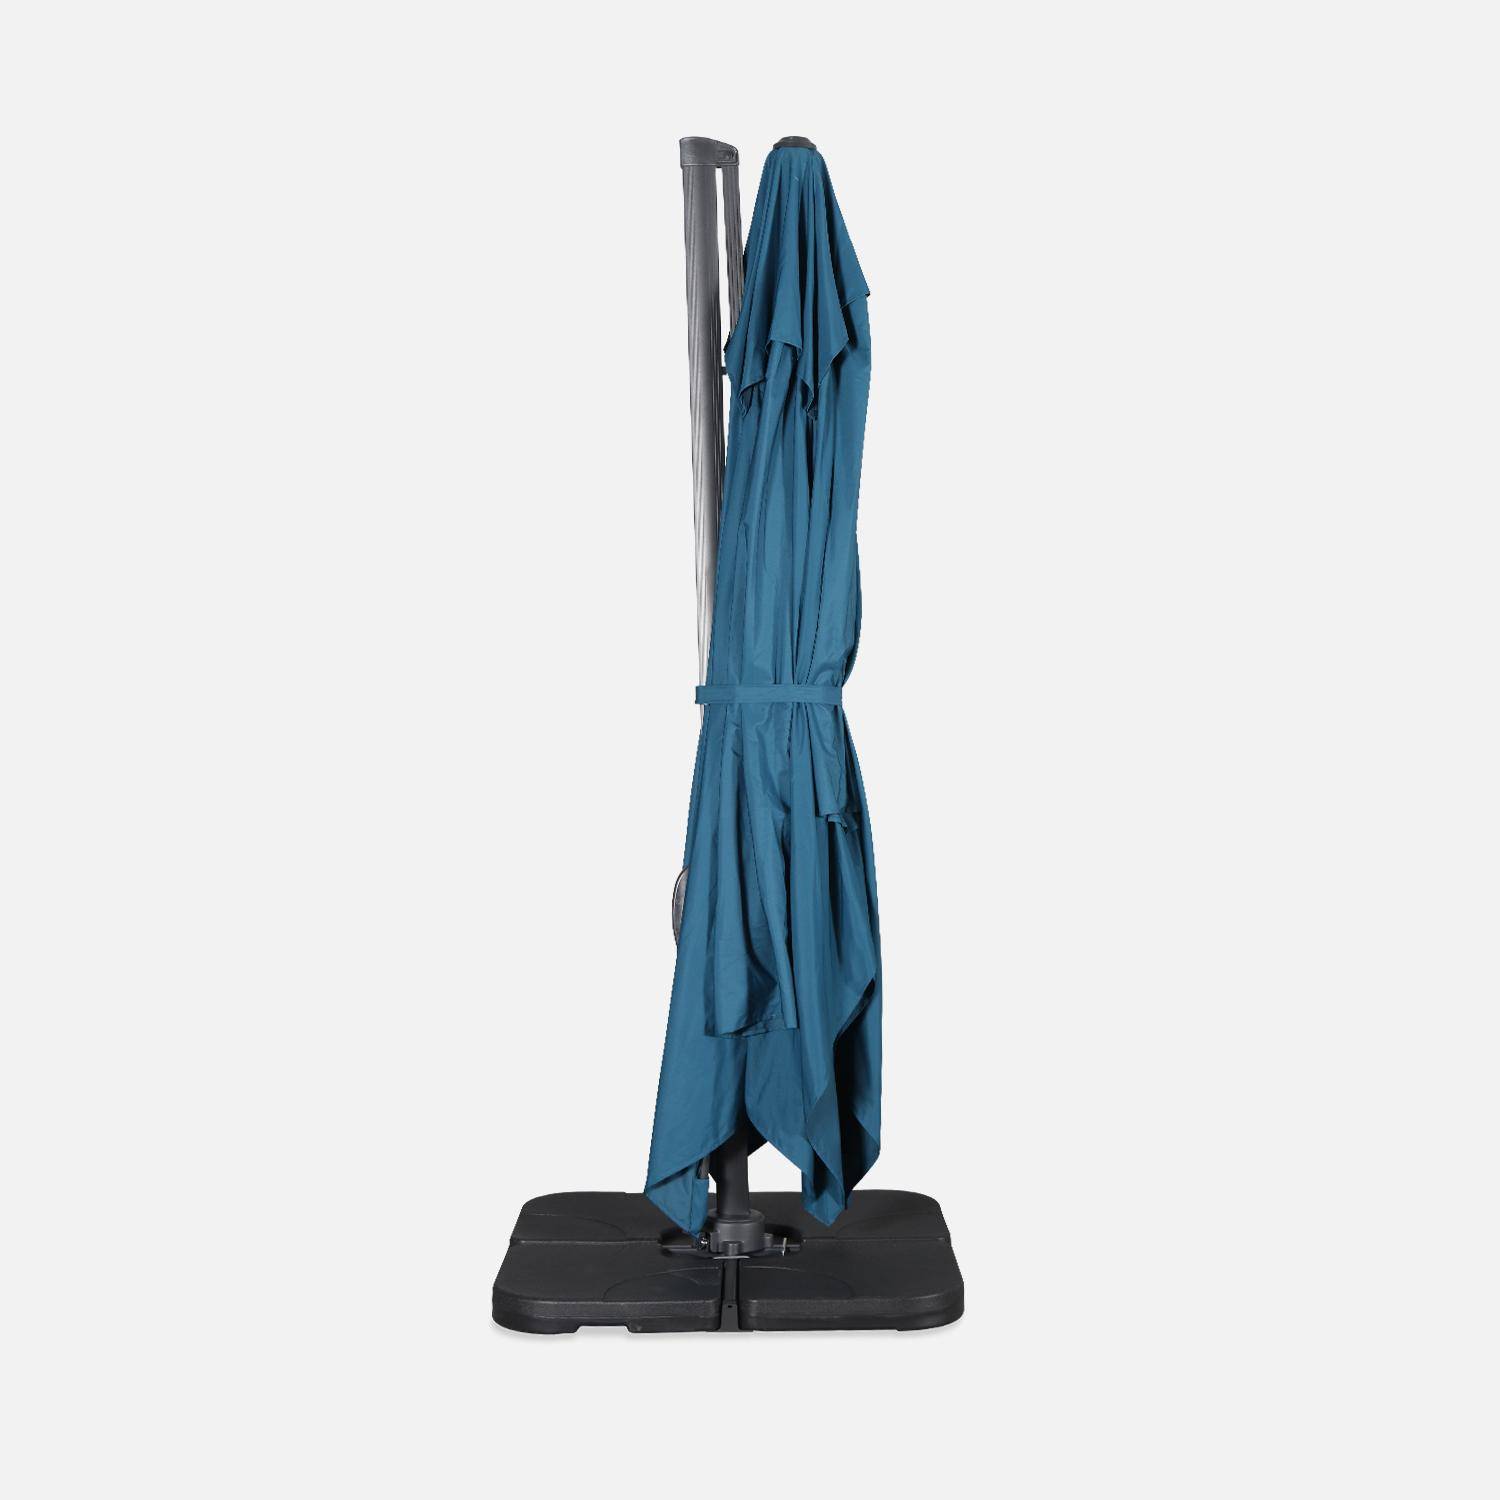 Sombrilla rectangular azul pato 3x4m + losas lastradas 50x50cm,sweeek,Photo8